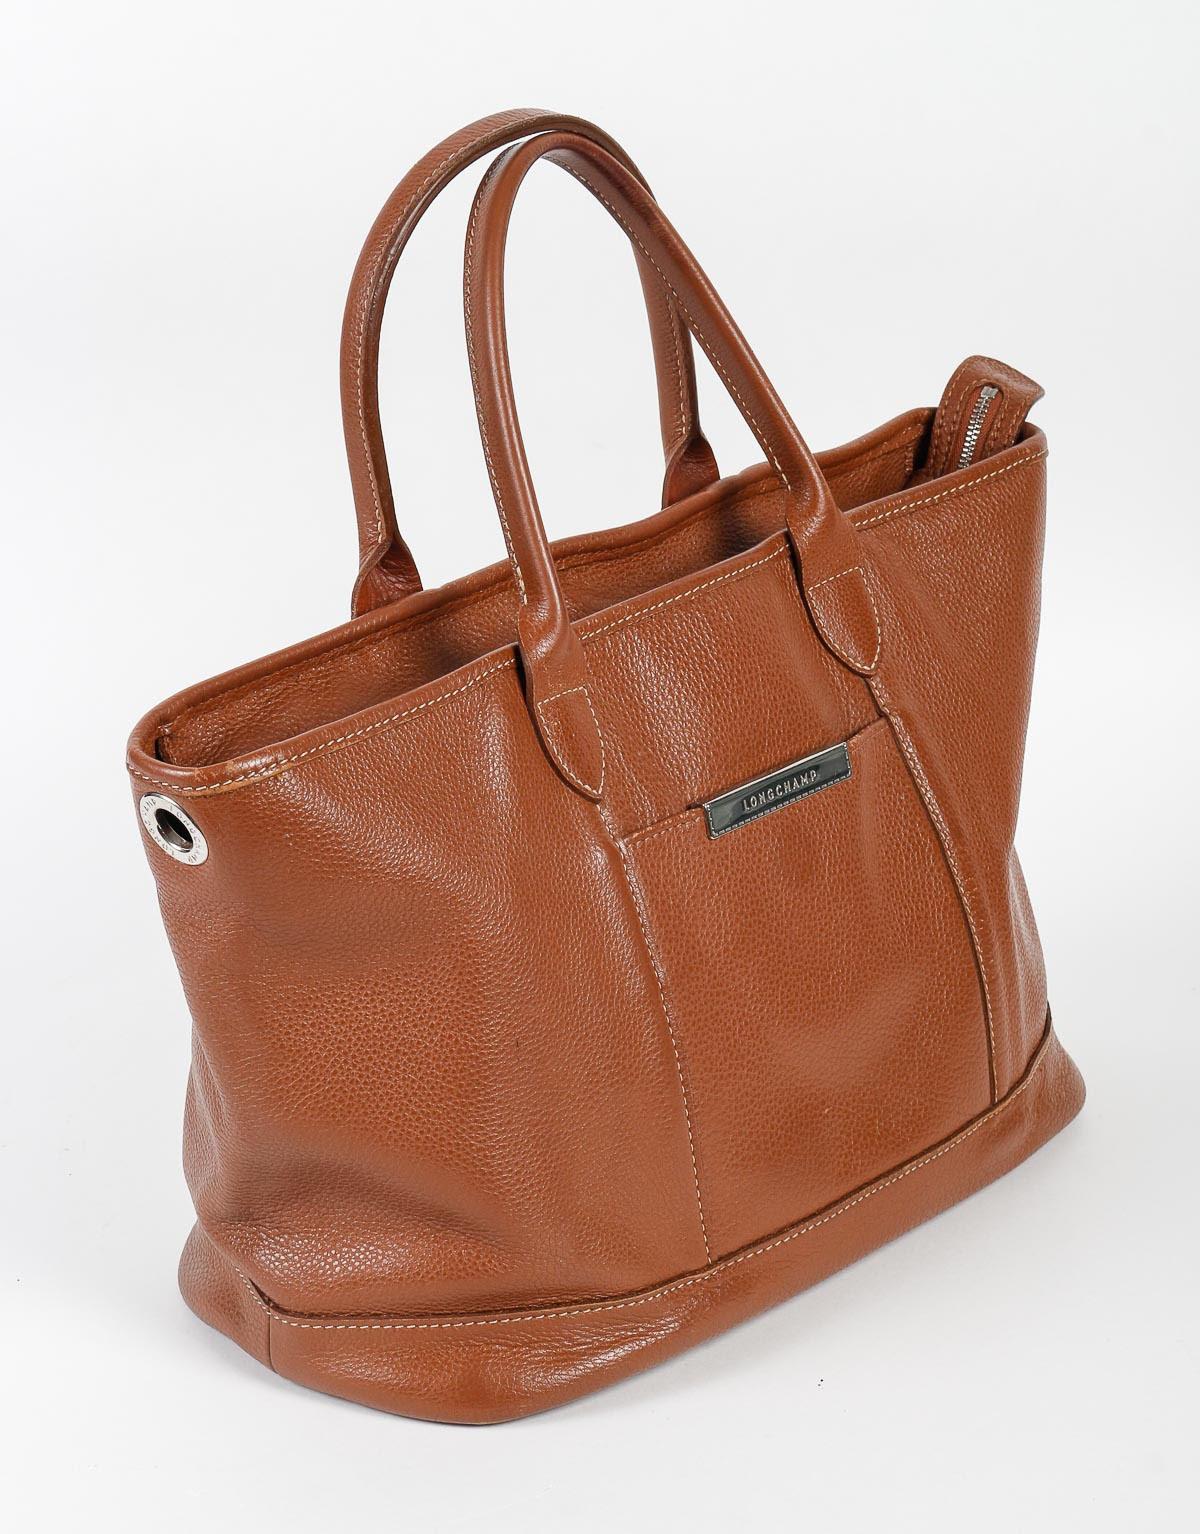 Vintage Handbag, Longchamp, Light Brown Leather, XXth century.

Longchamp handbag, light brown leather, chromed metal plate with the brand, good condition, XXth century.    
h: 23cm , w: 40cm, d: 17cm